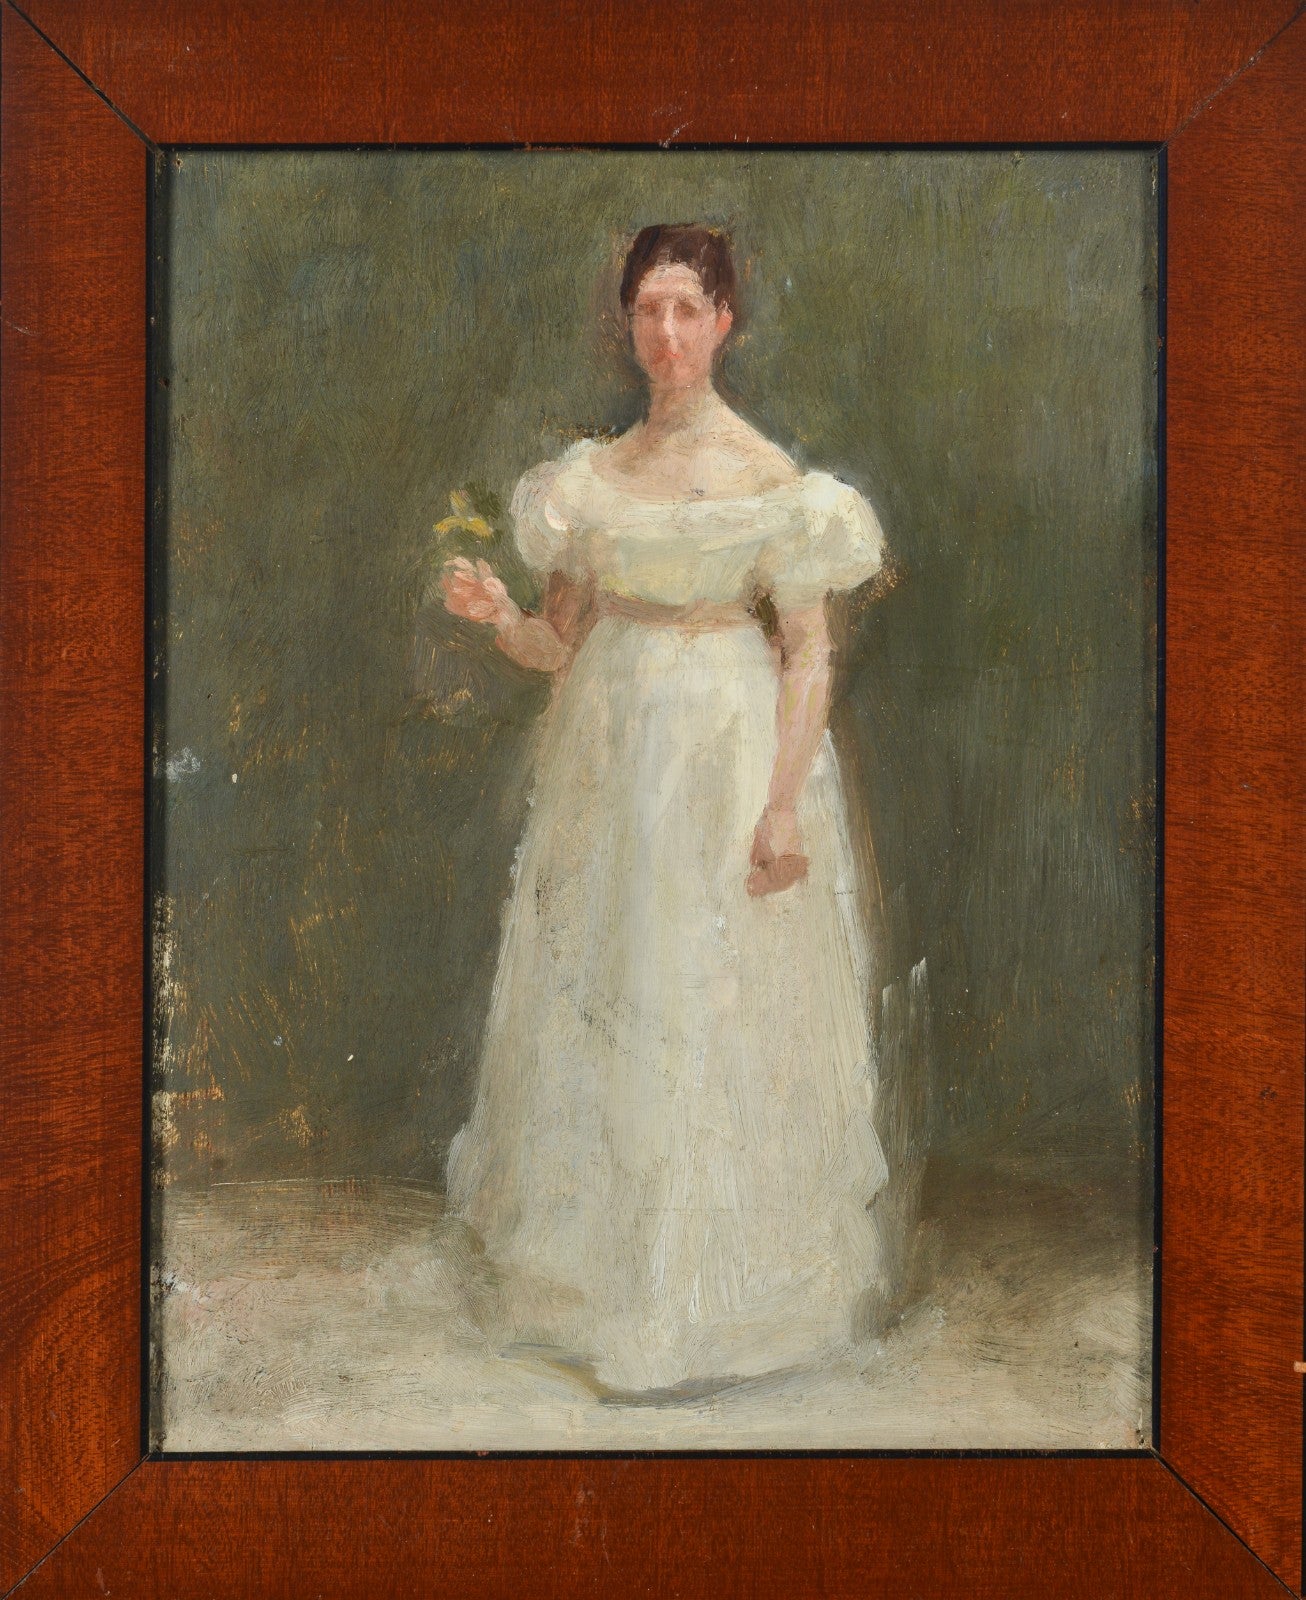 Julius Paulsen. A woman in white holding a flower, circa 1900